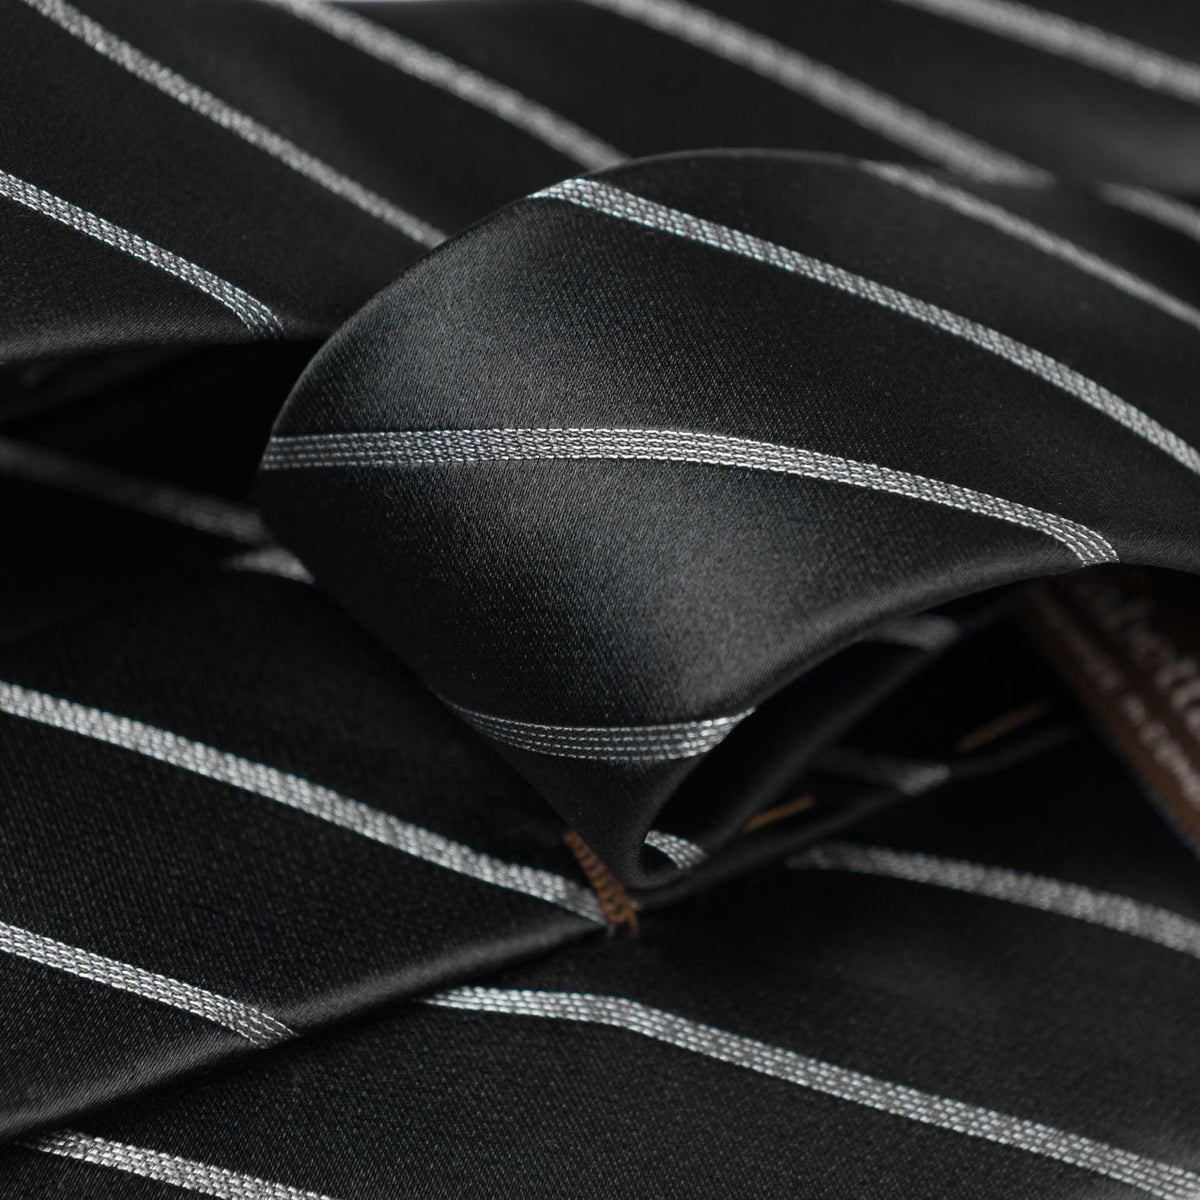 Black Italian Silk Striped Tie